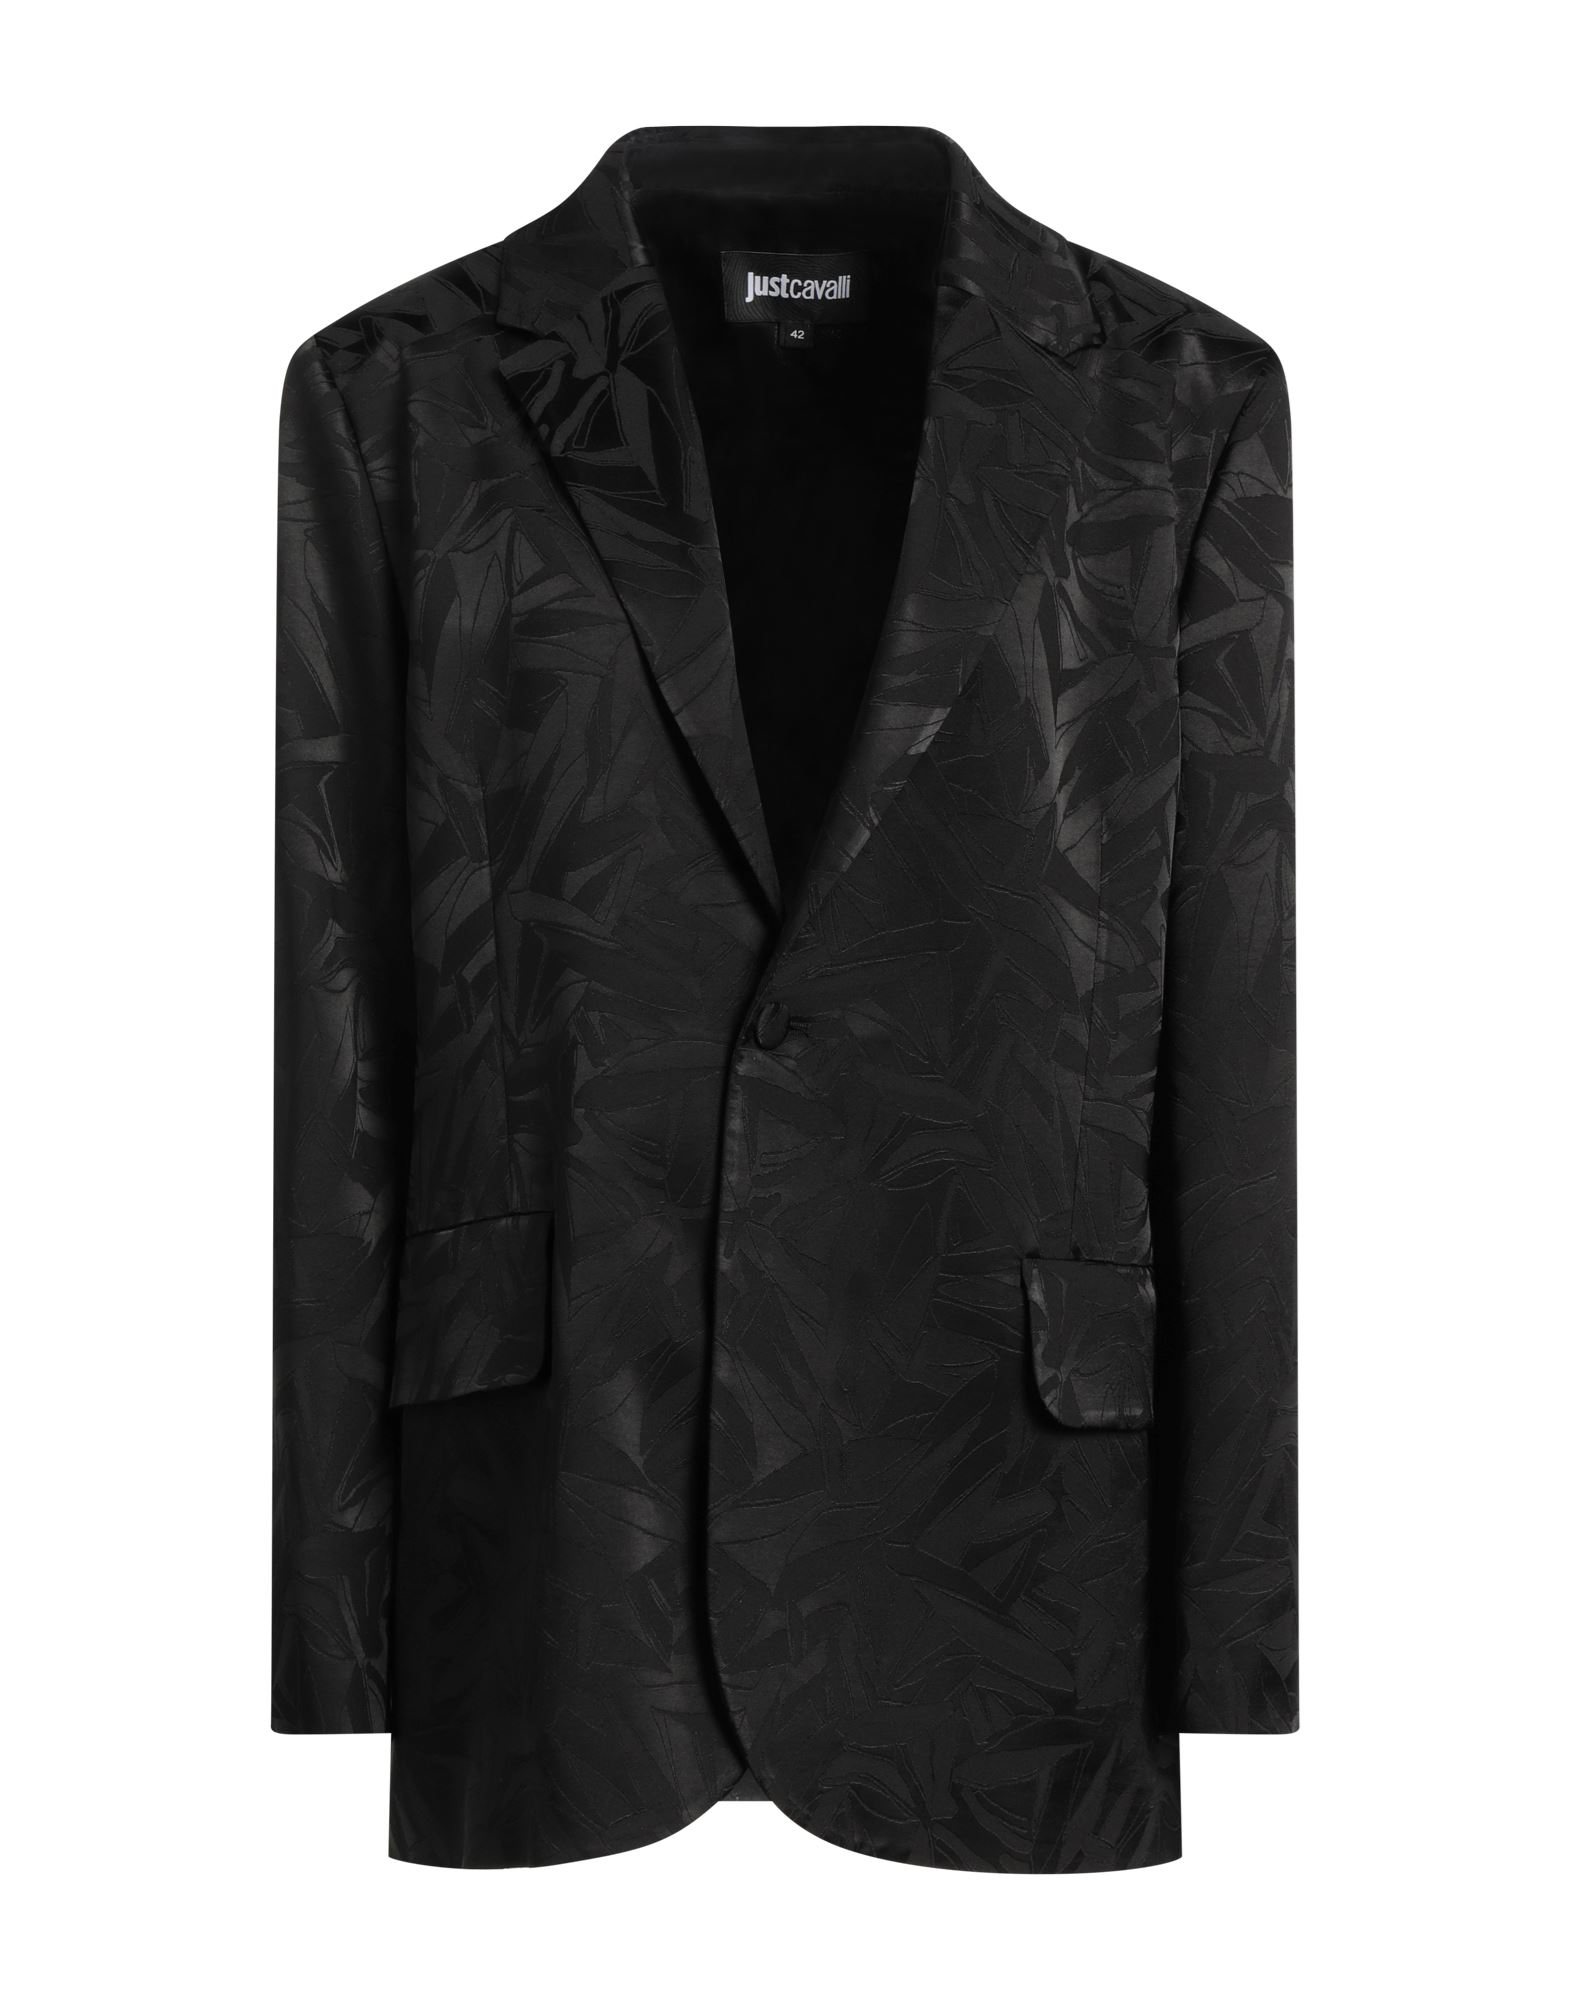 Just Cavalli Suit Jackets In Black